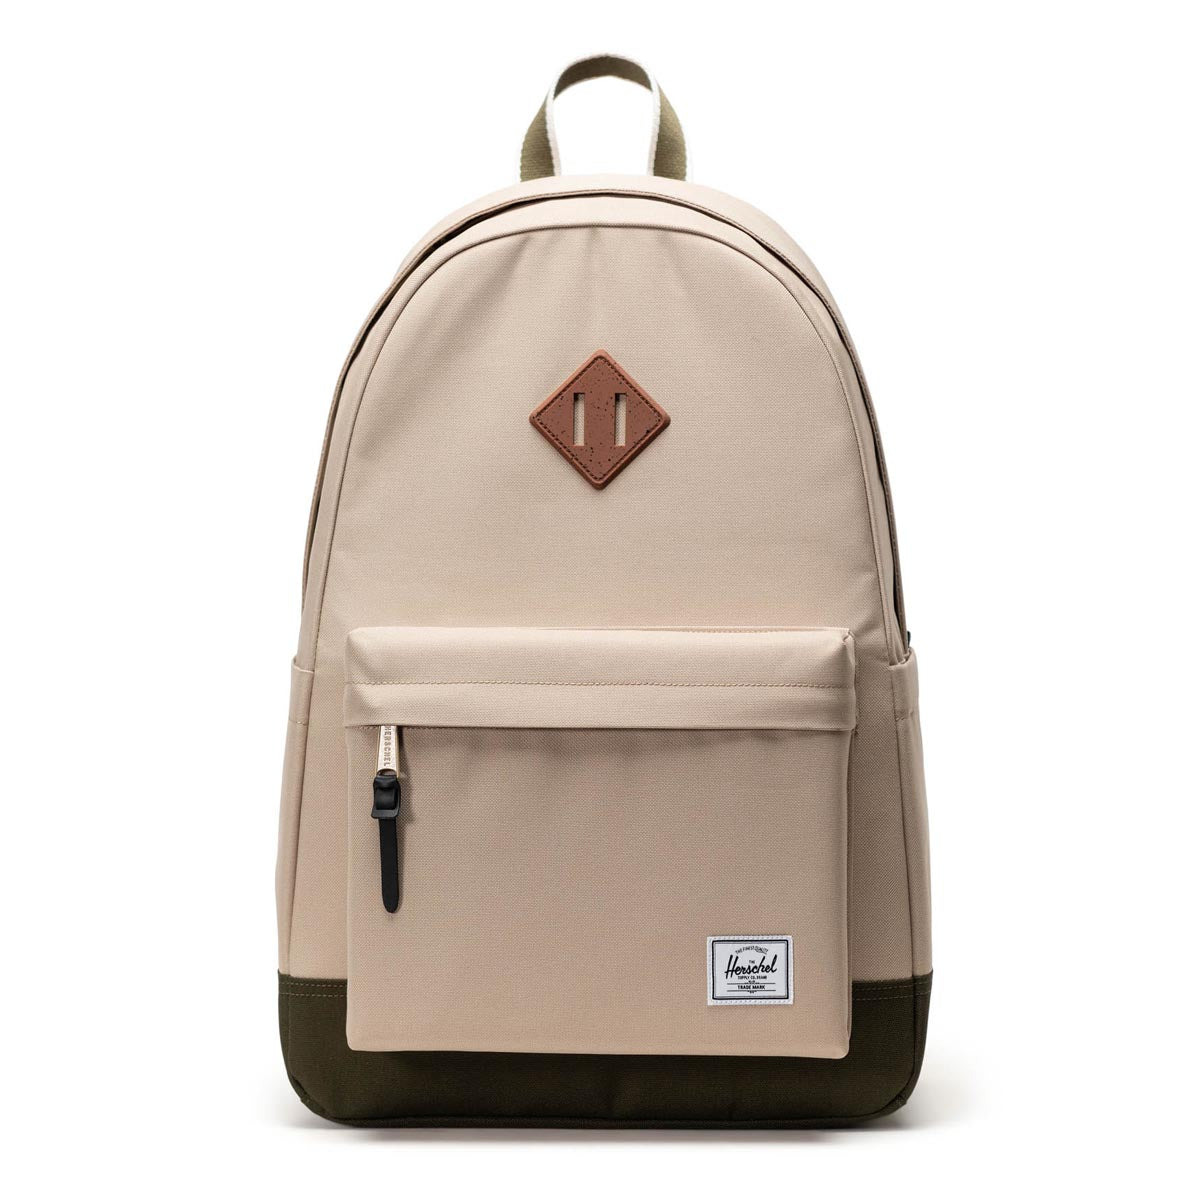 Herschel Supply Heritage Backpack - Twill/Ivy Green image 1